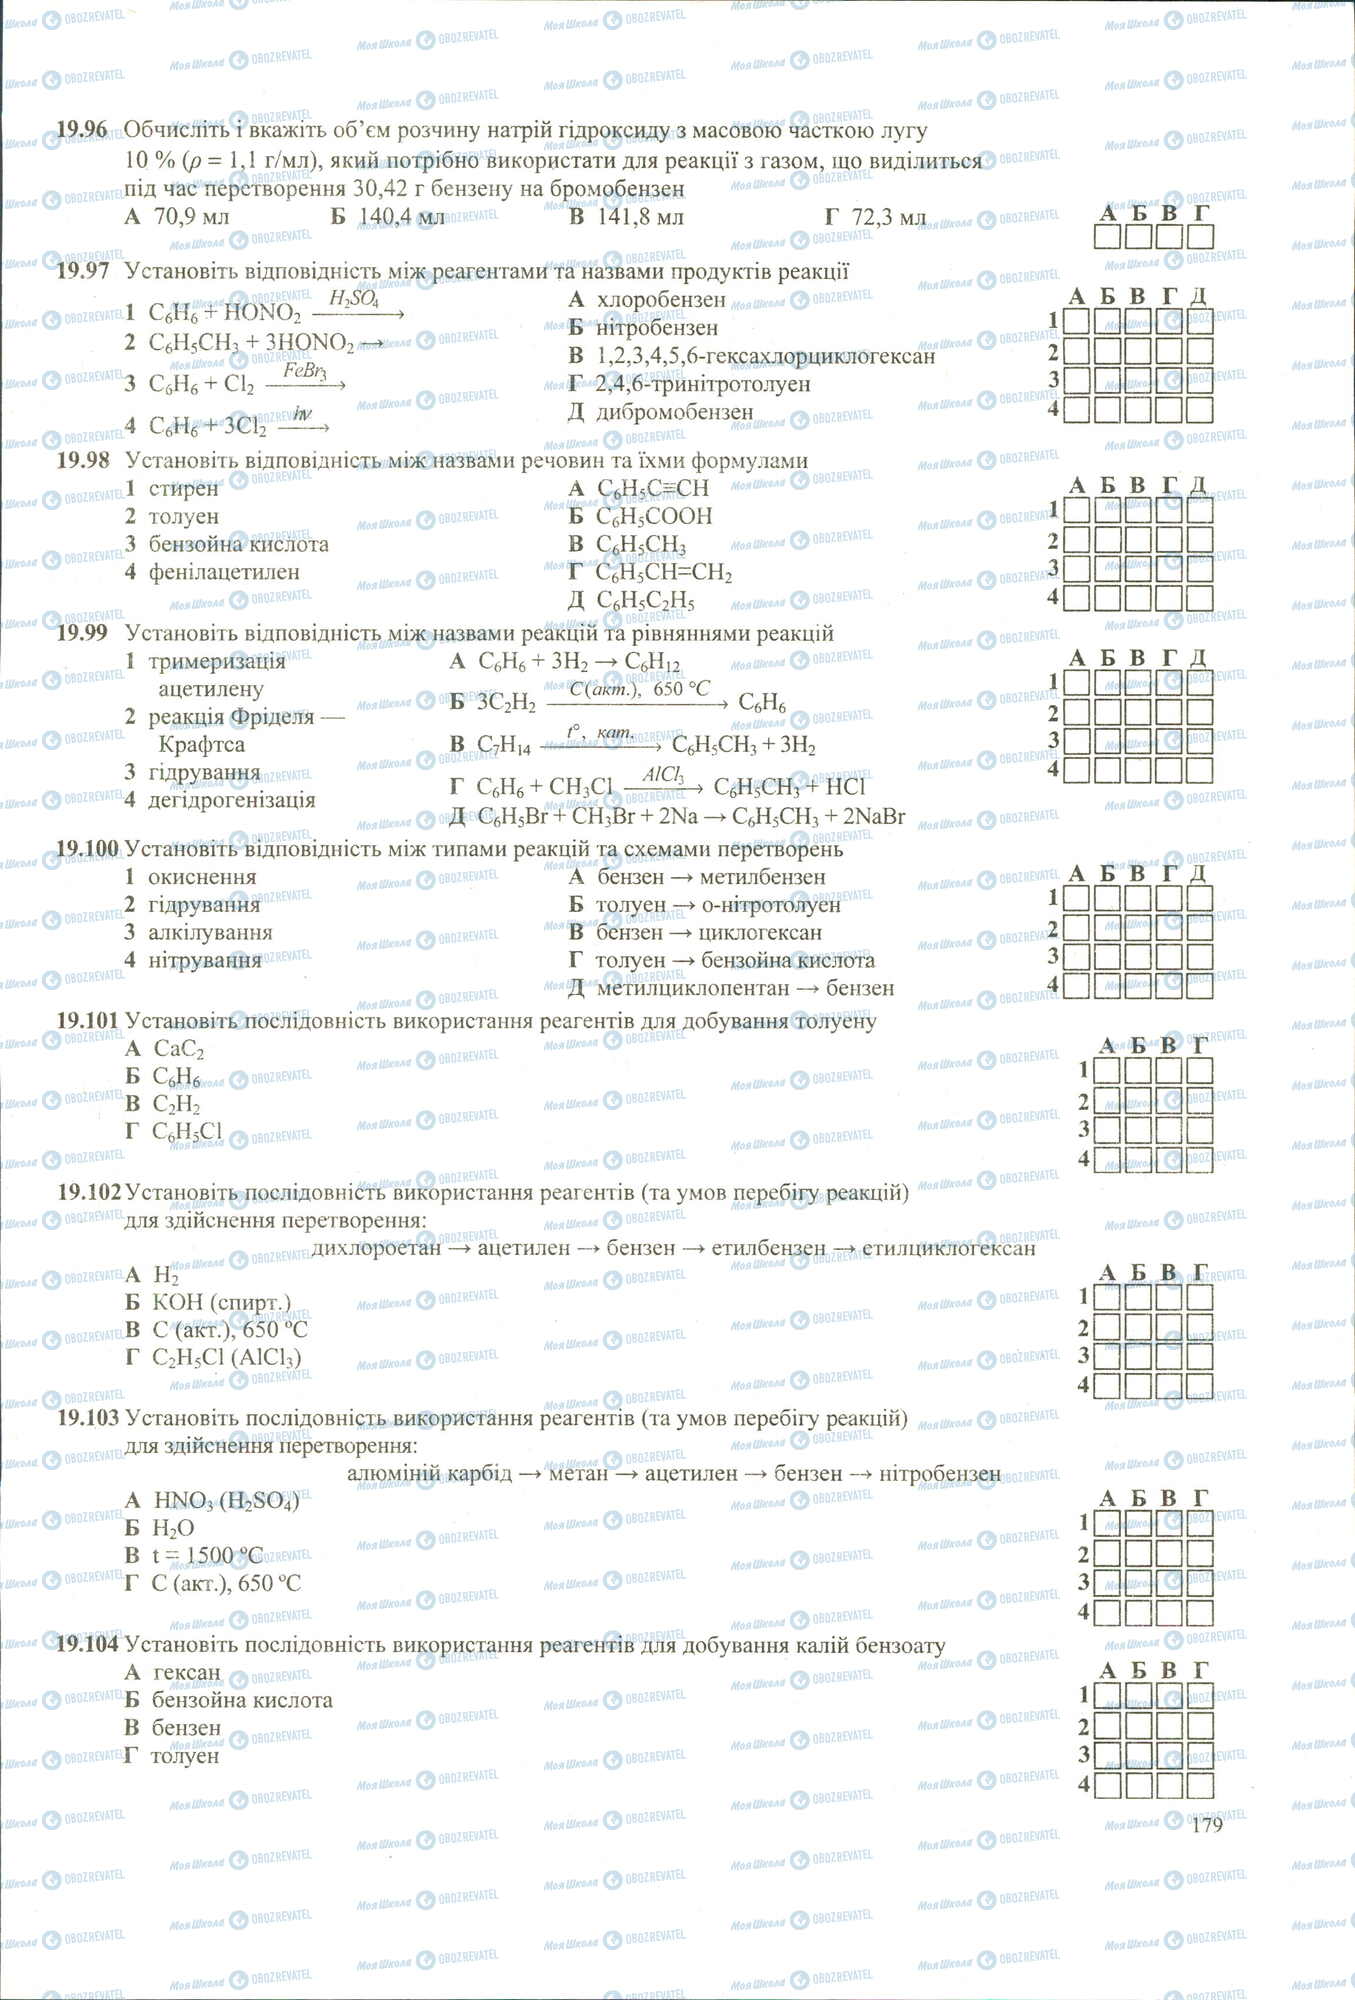 ЗНО Химия 11 класс страница 96-104